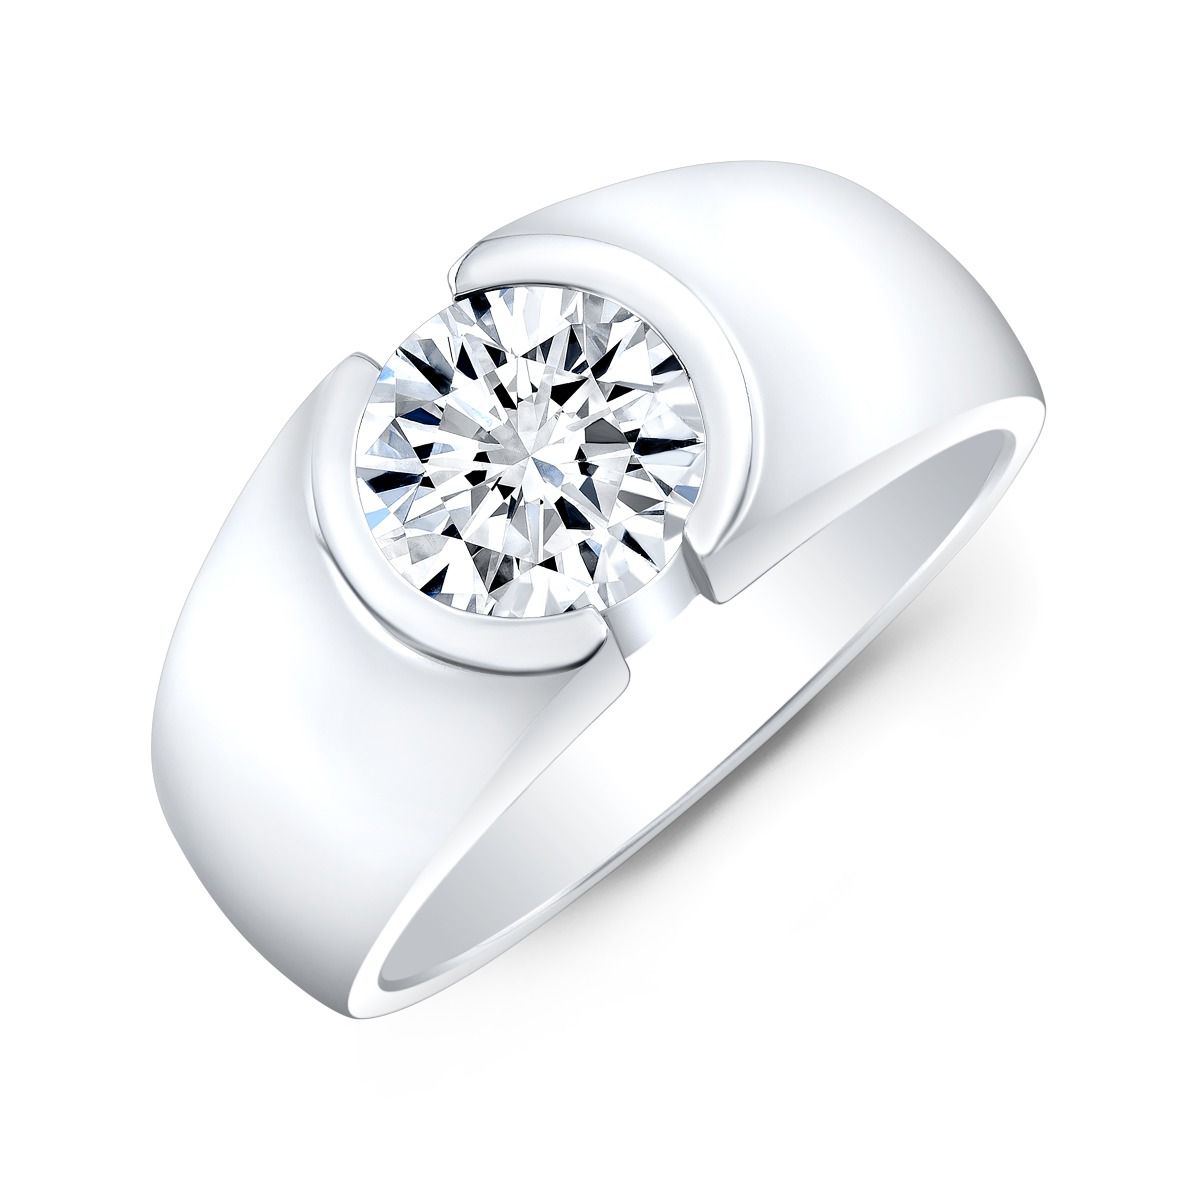 1/2 CT White gold diamond engagement ring size 6 | eBay